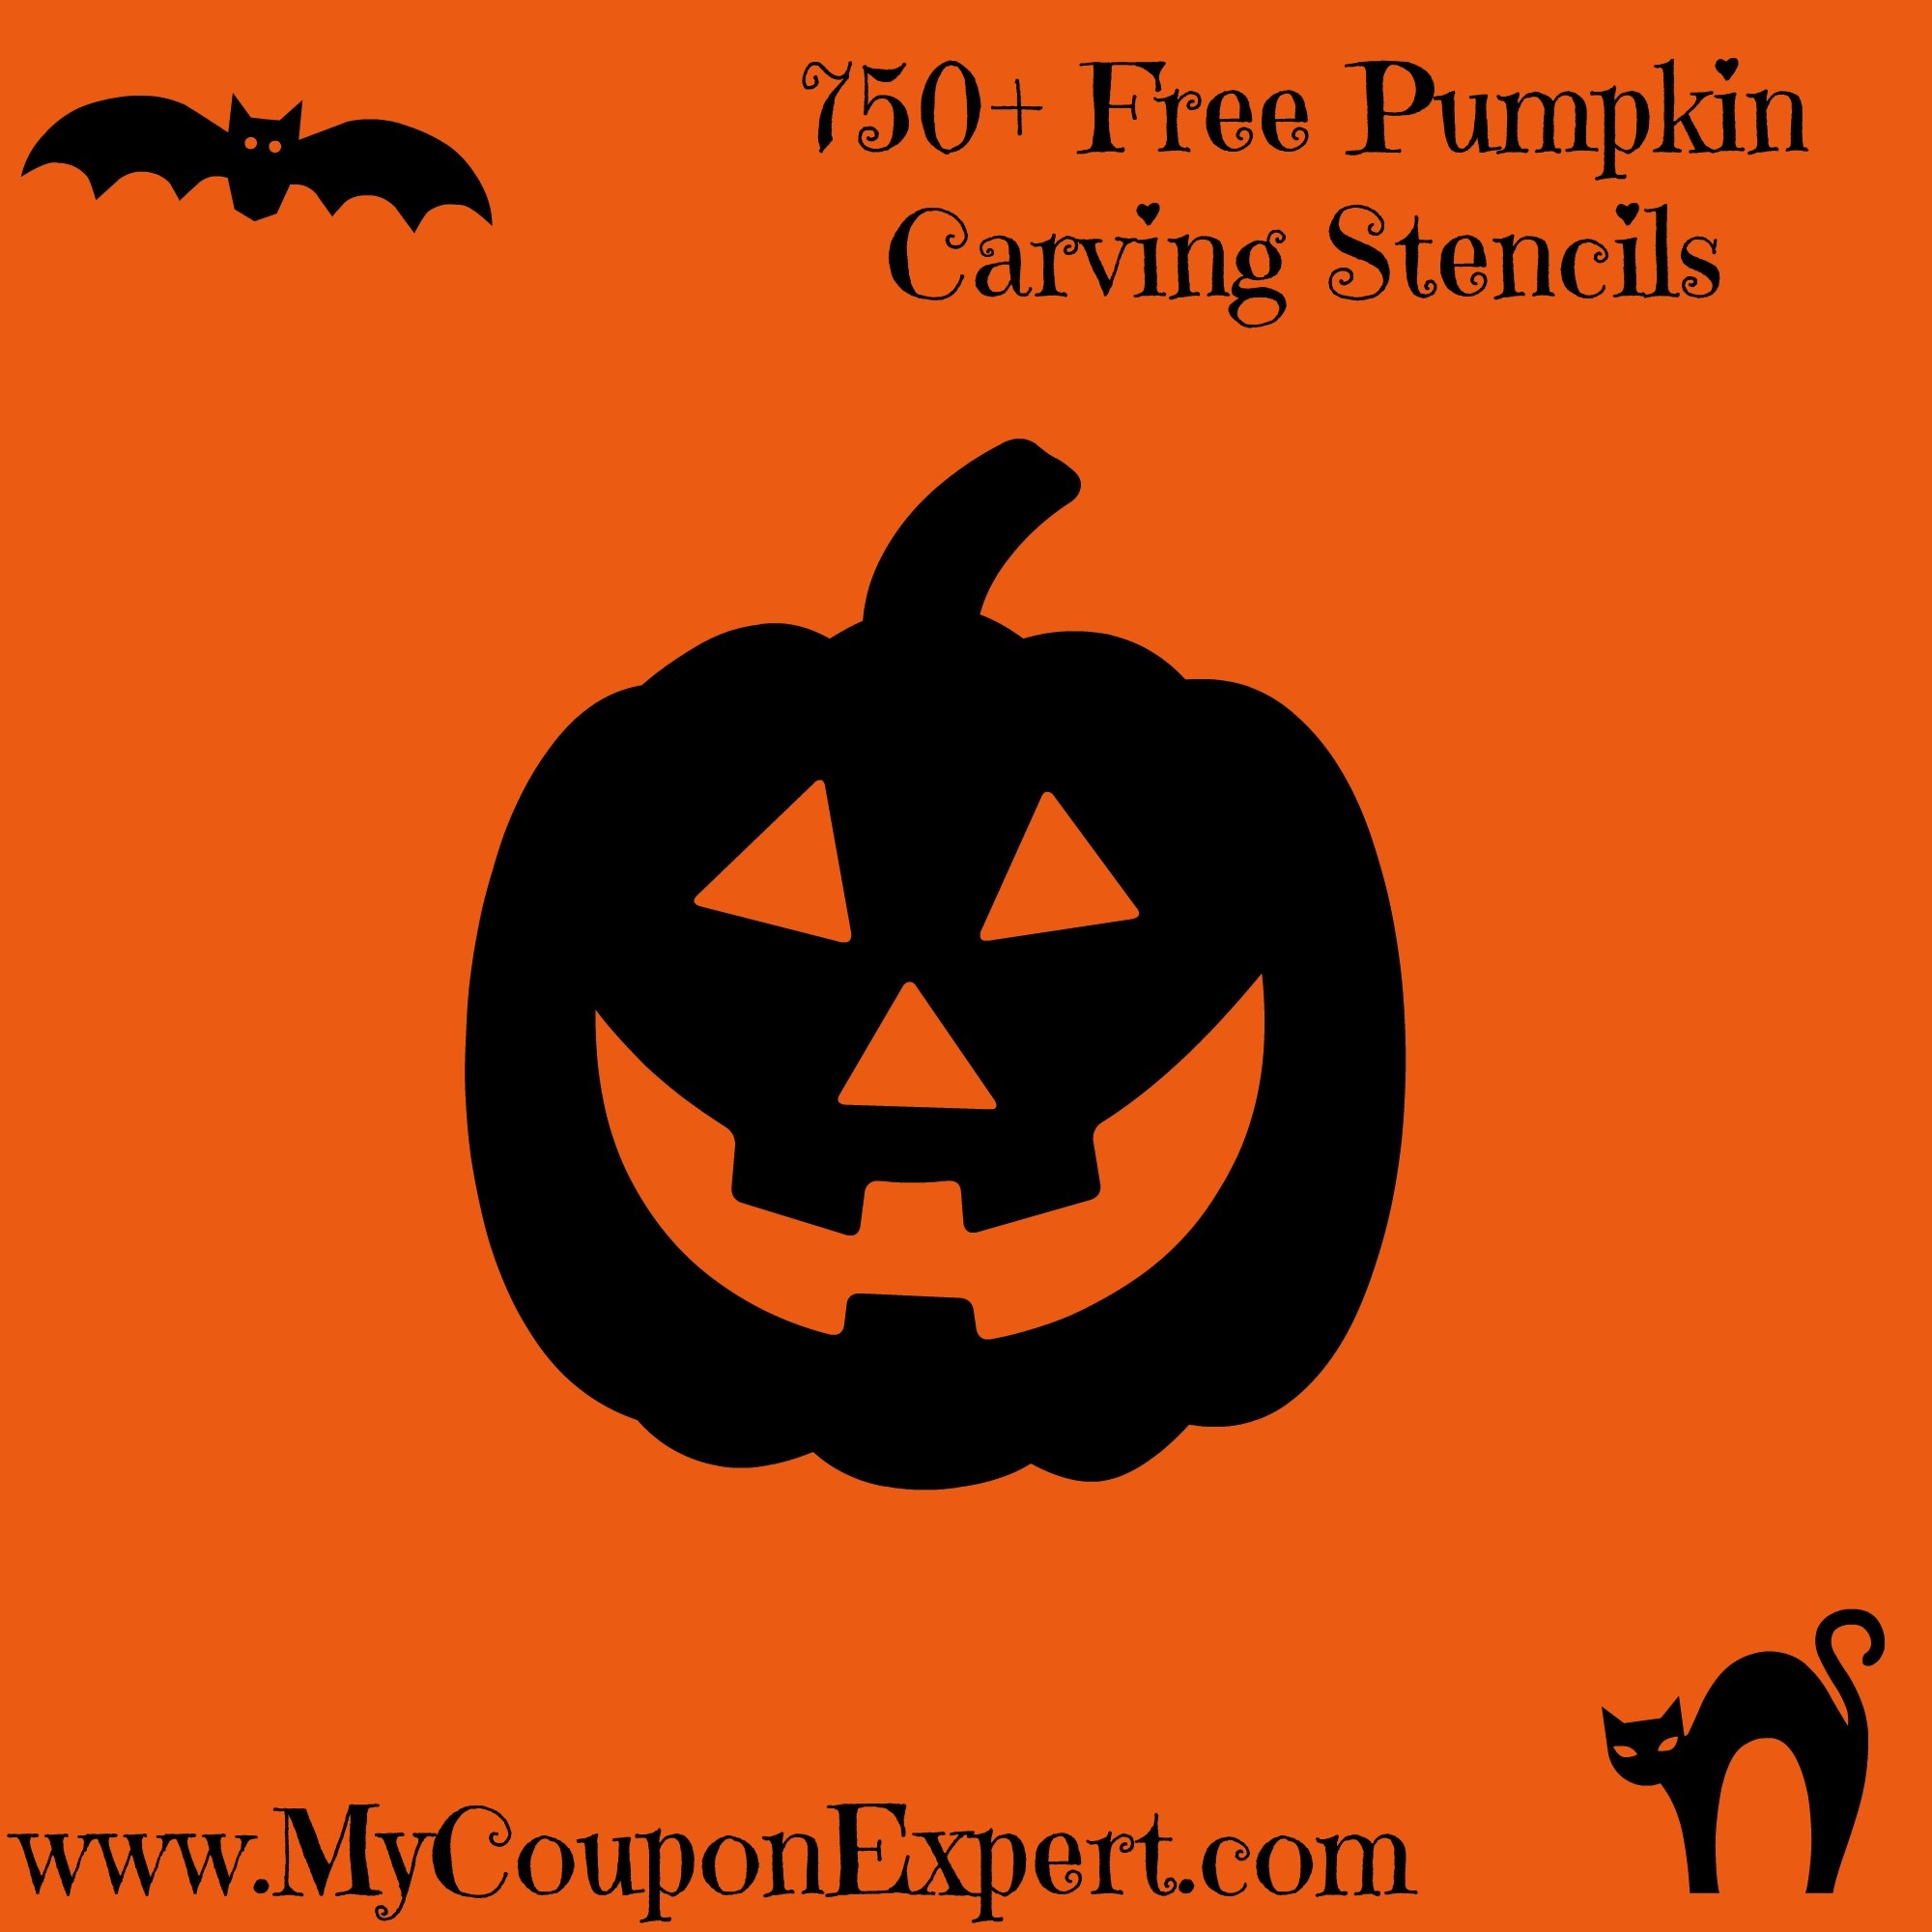 750+ Free Pumpkin Carving Stencils · - Free Printable Pumpkin Carving Stencils